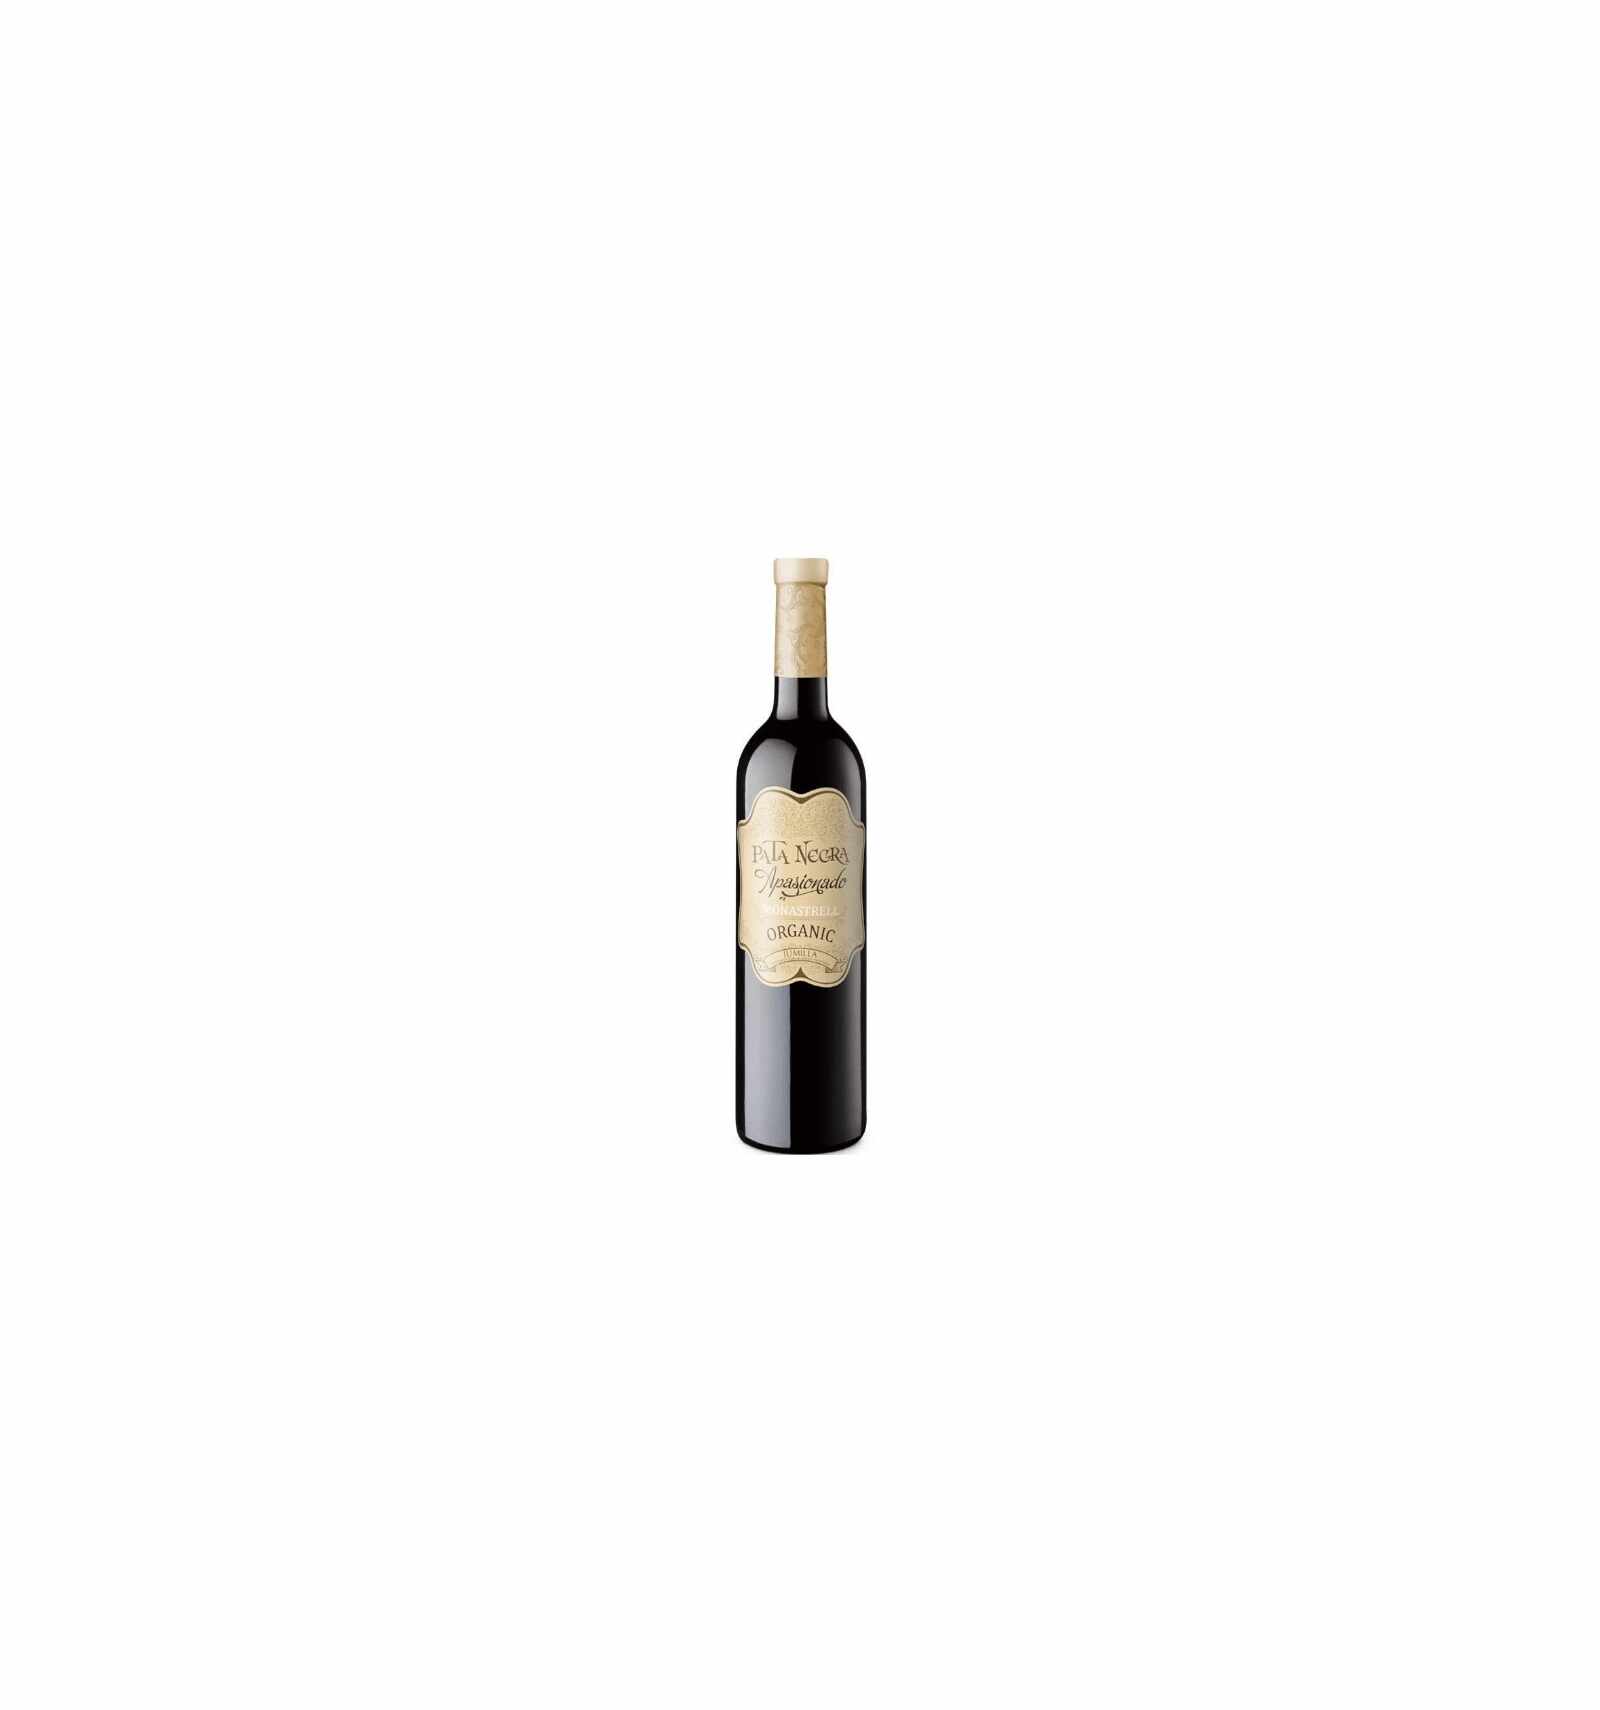 Vin rosu, Monastrell, Pata Negra Apasionado Organic Jumilla, 14.5% alc., 0.75L, Spania